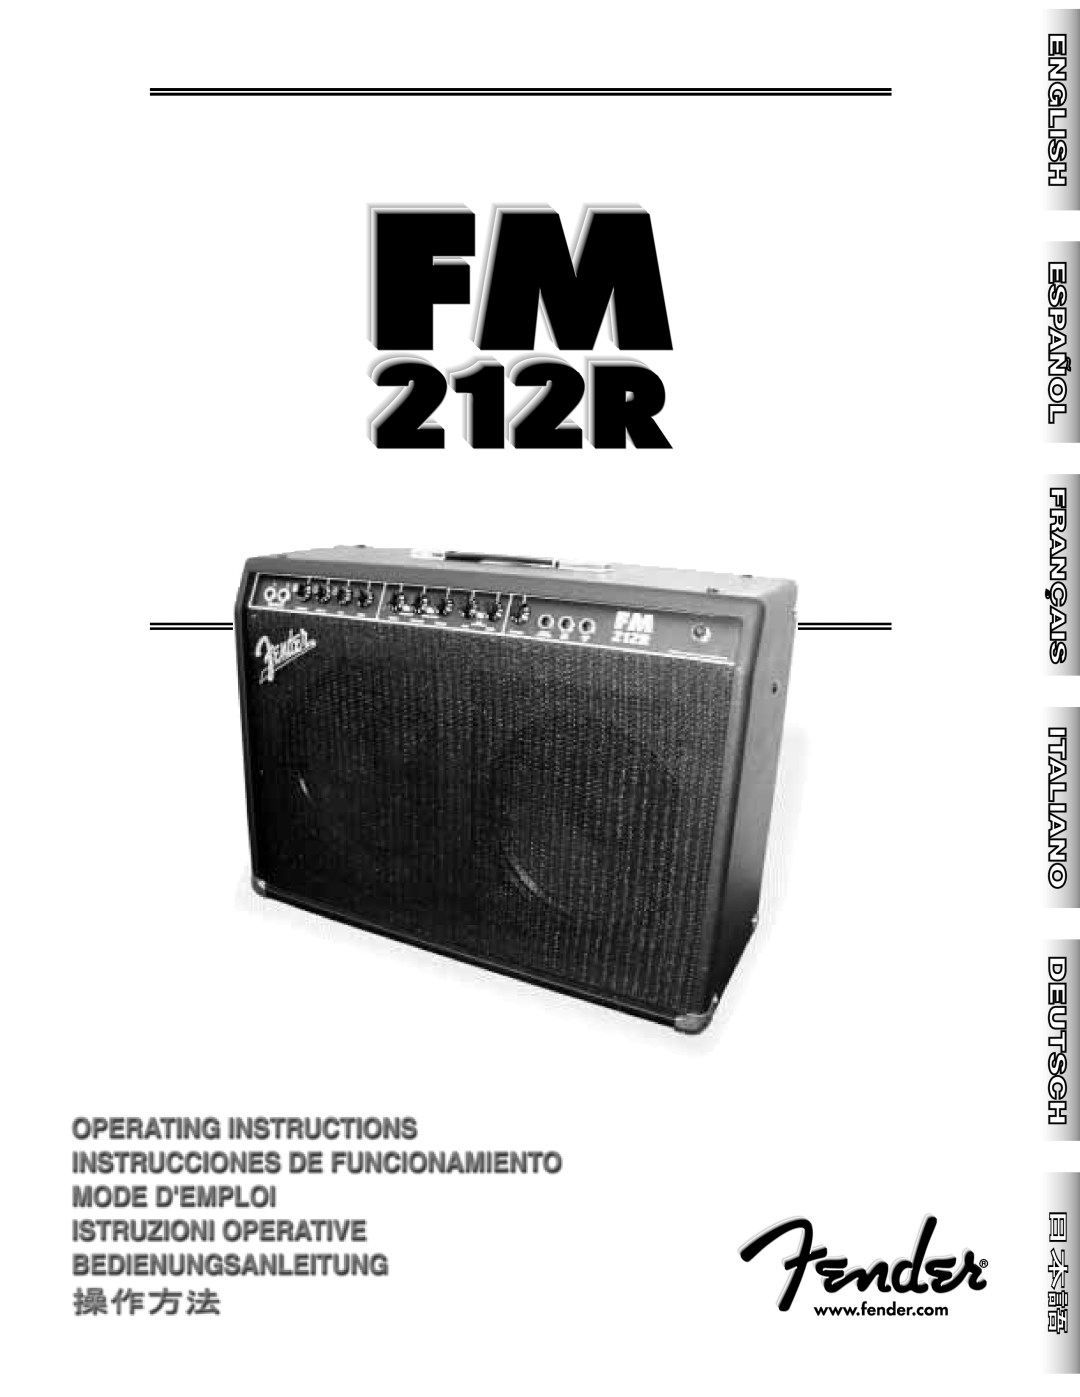 Fender 212R manual 